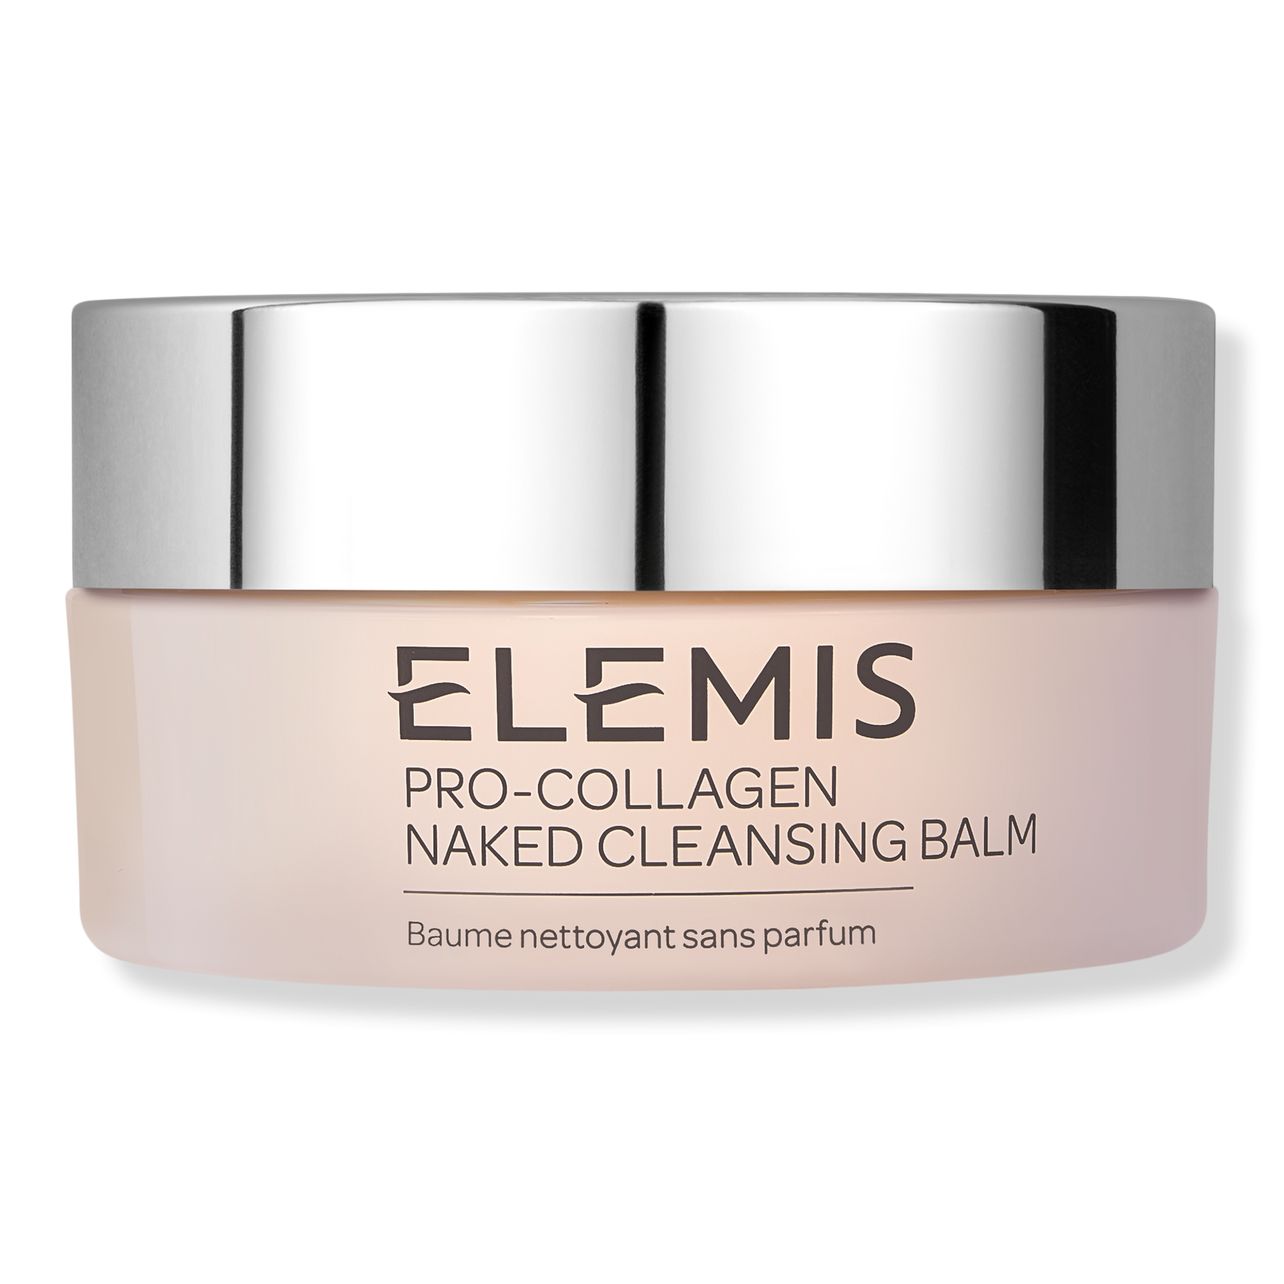 Pro-Collagen Naked Cleansing Balm | Ulta